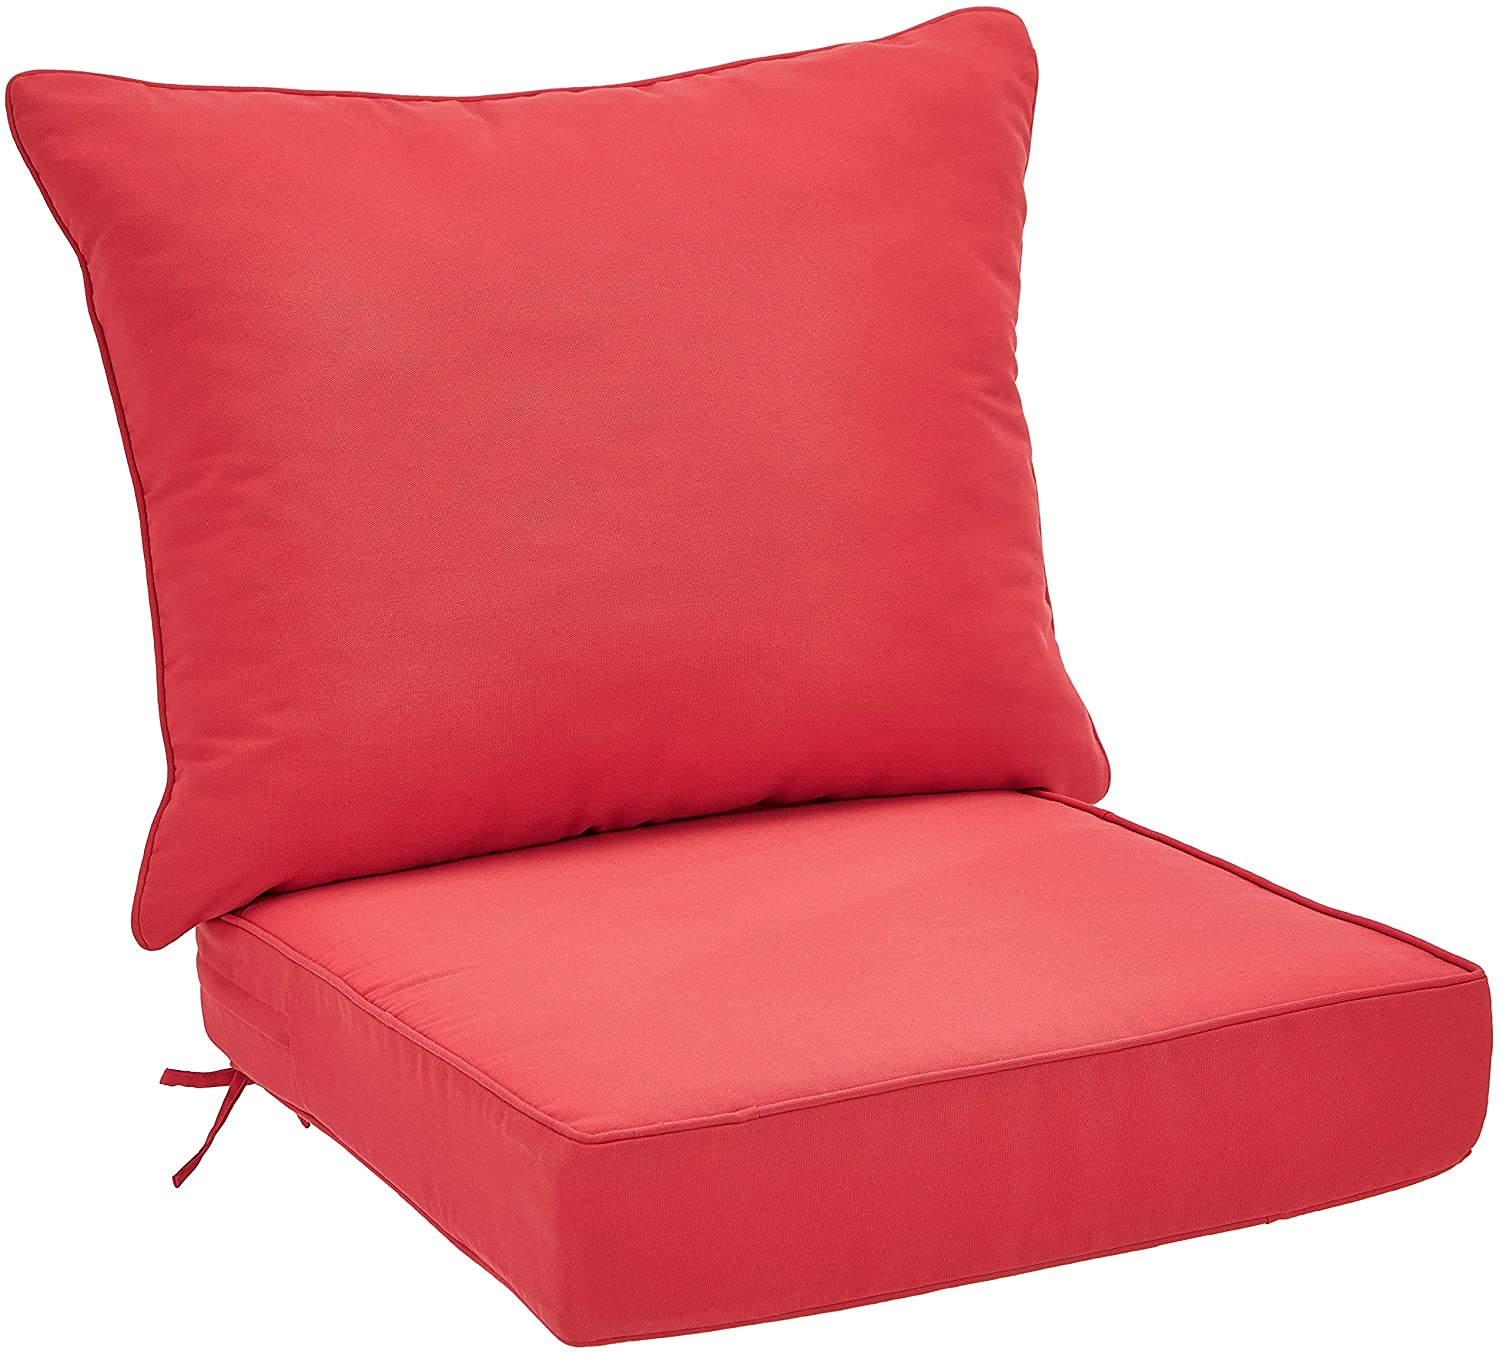 Photo 1 of Amazon Basics Deep Seat Patio Seat and Back Cushion Set  Red